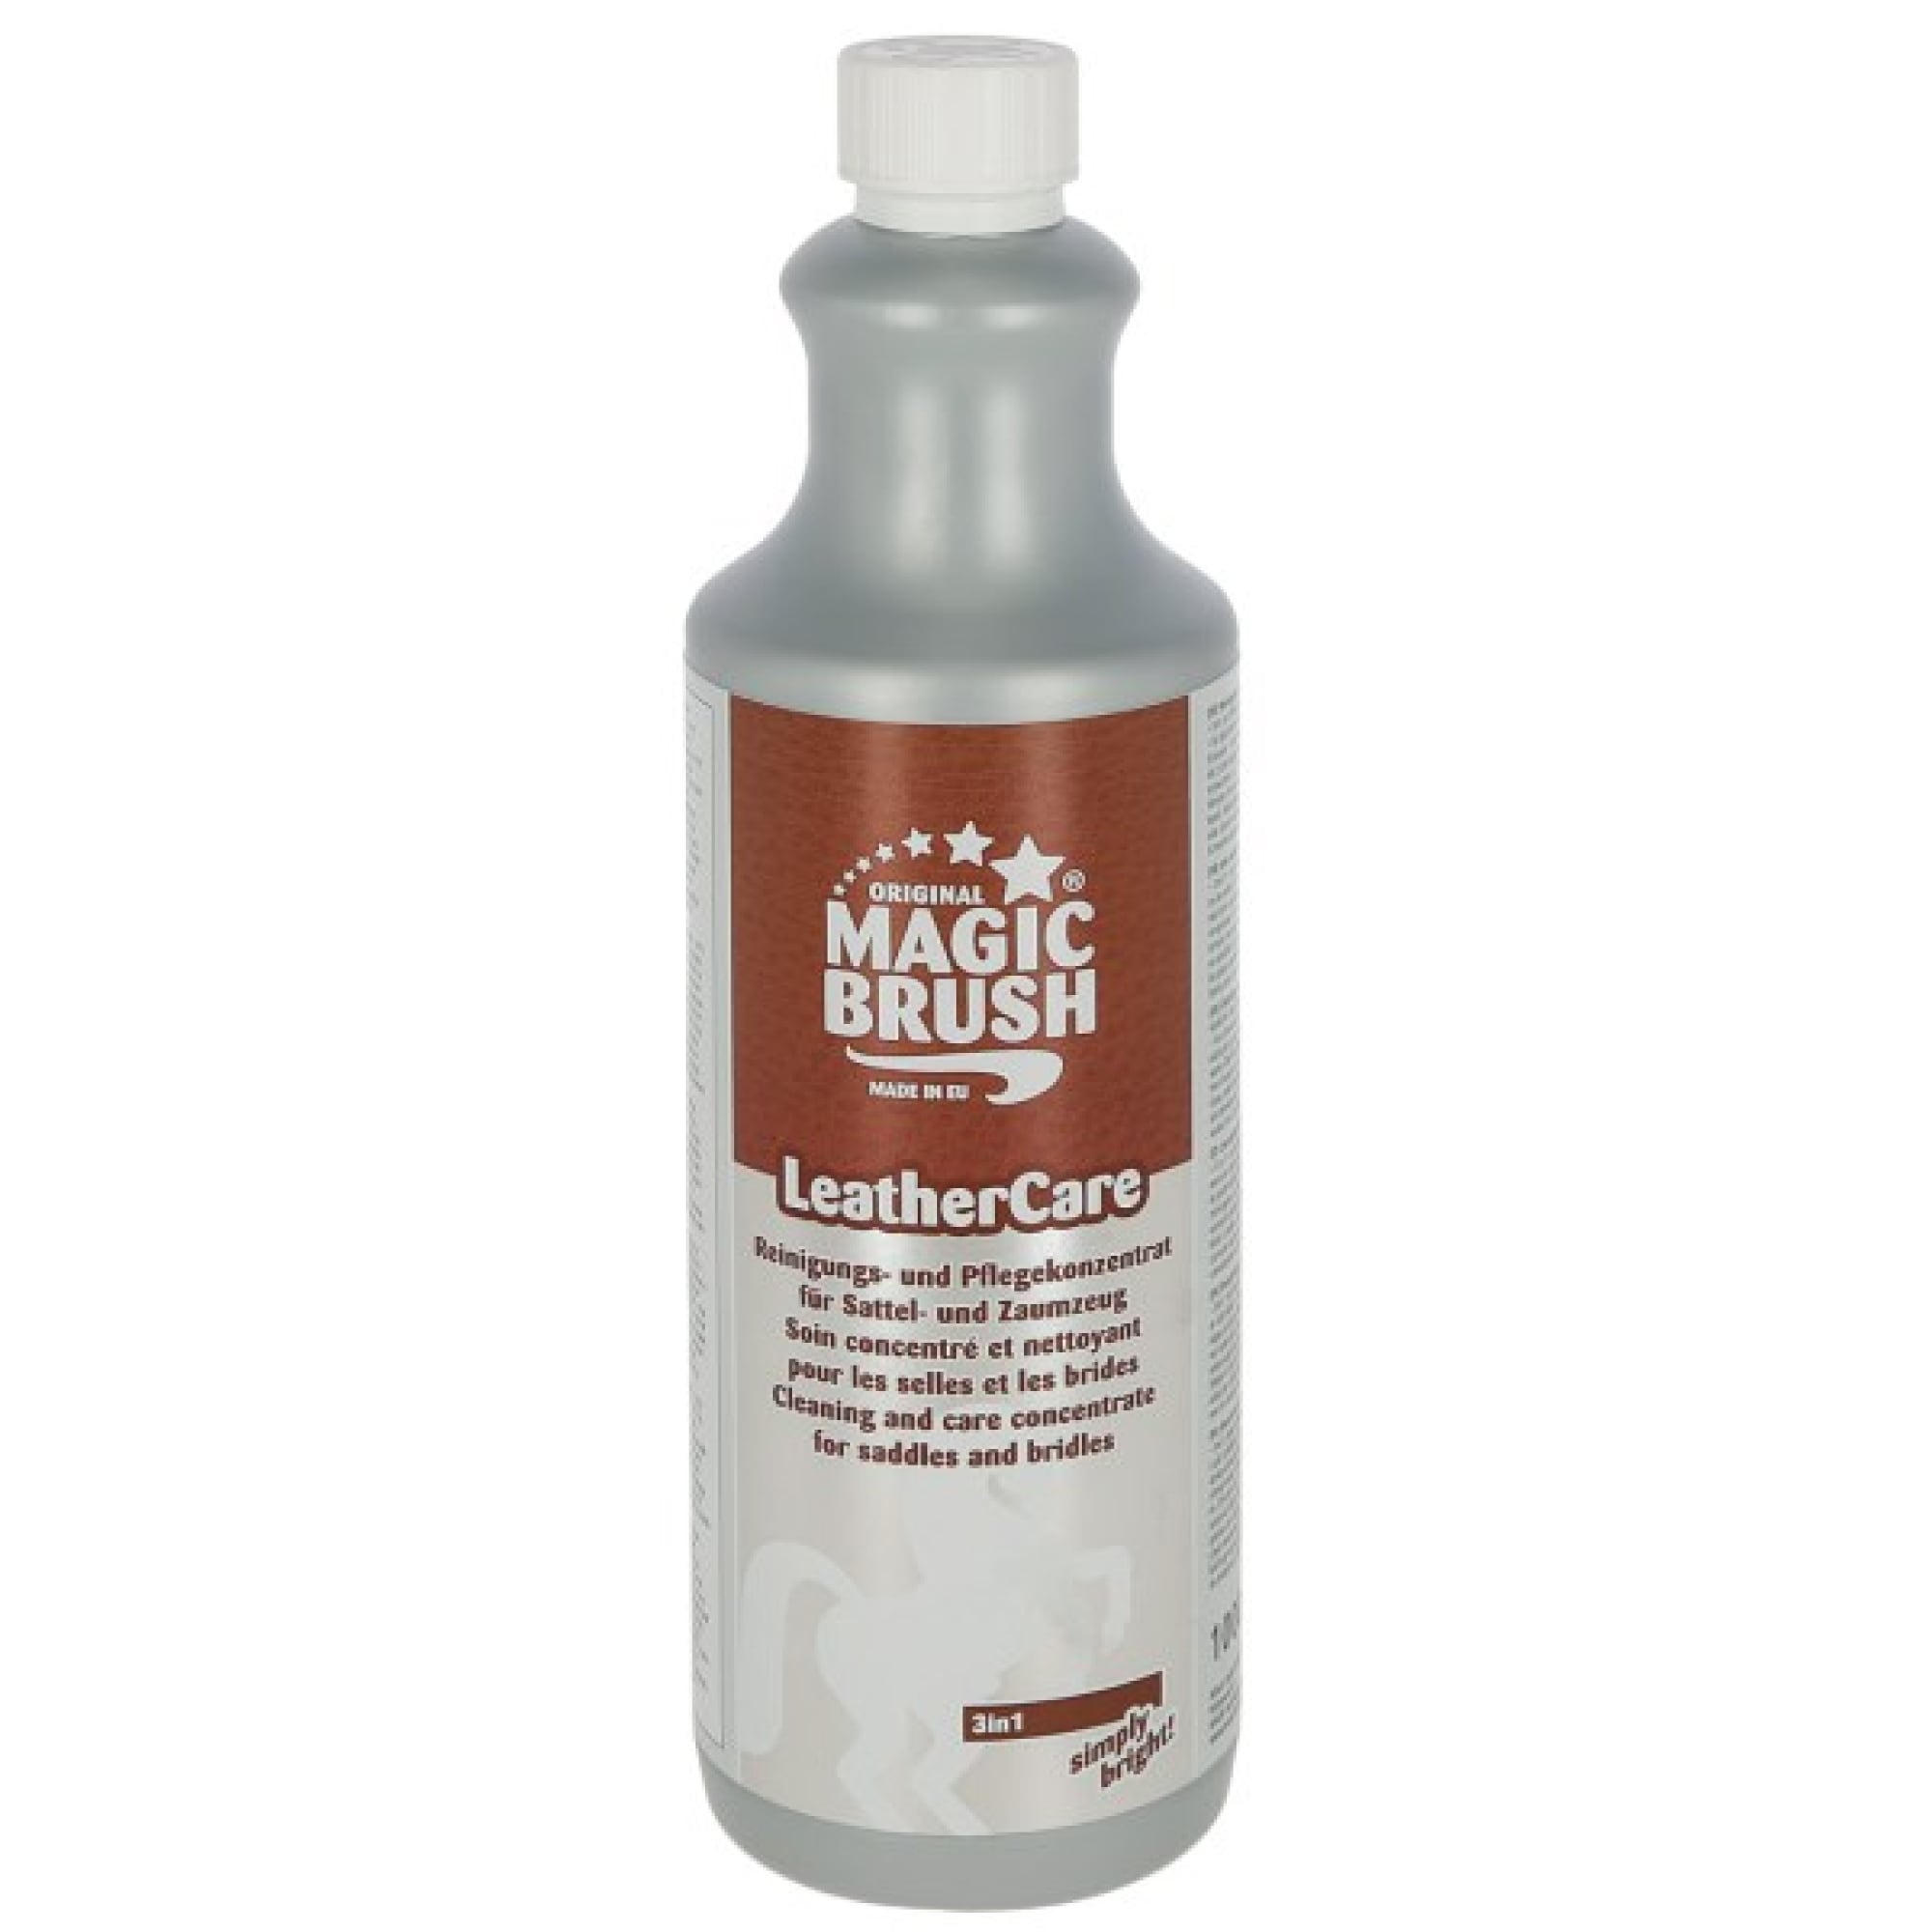 MagicBrush Leather Care 3en1, 1000ml